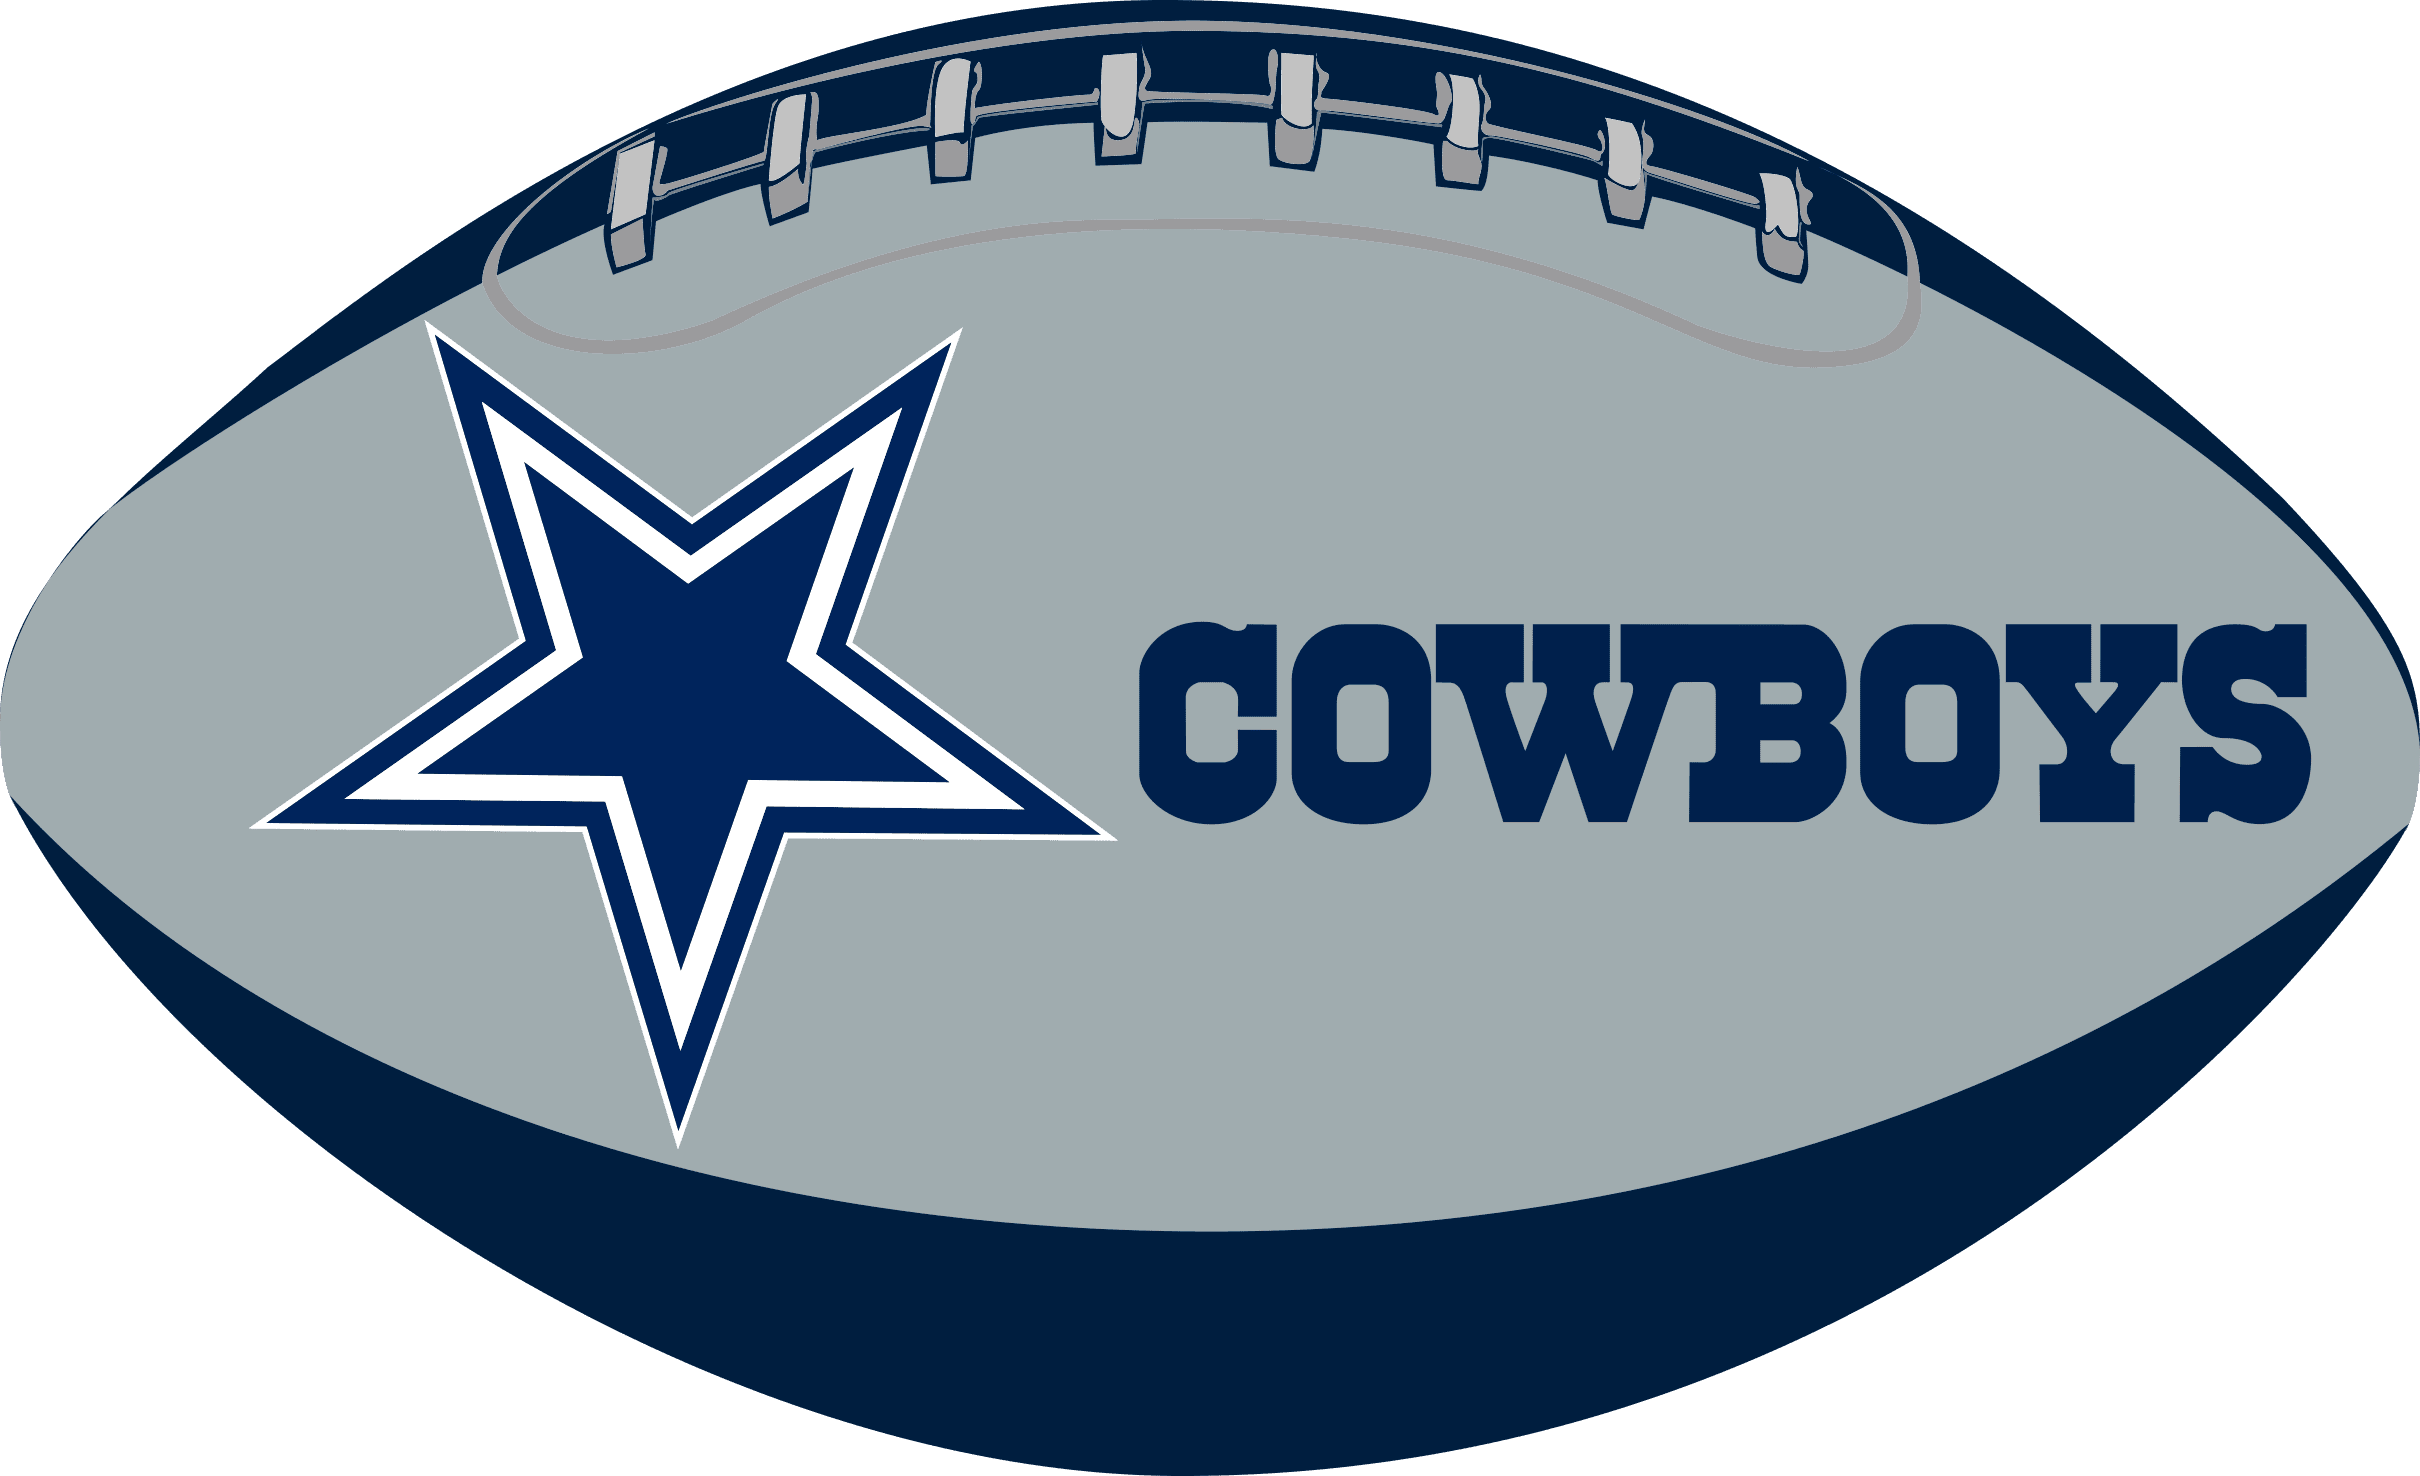 Dallas cowboys clipart logo free on jpg | Dallas cowboys logo - Clip ...